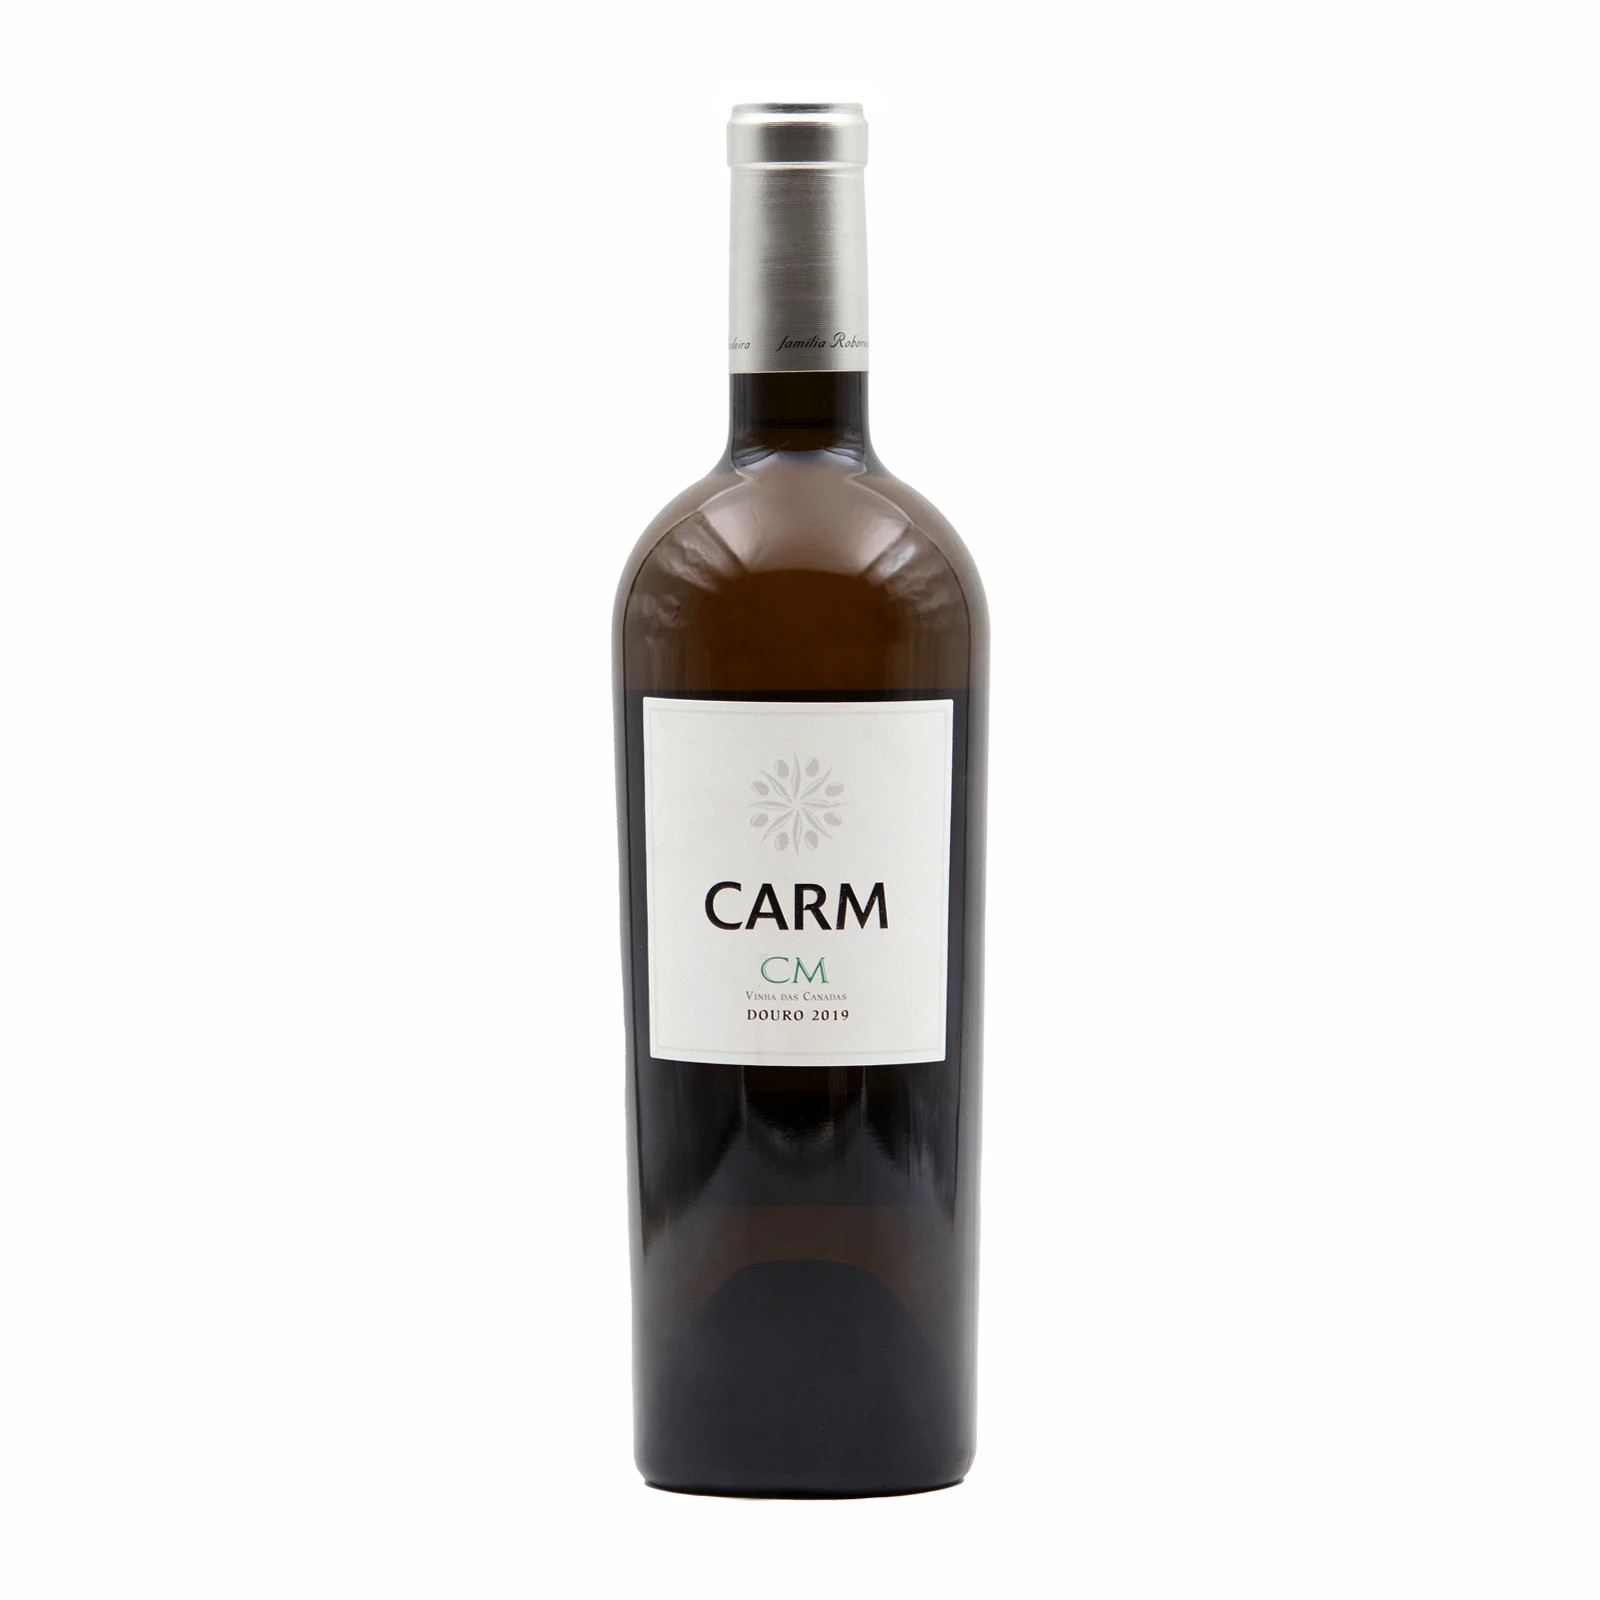 CARM CM Vinha das Canadas Weiß 2019